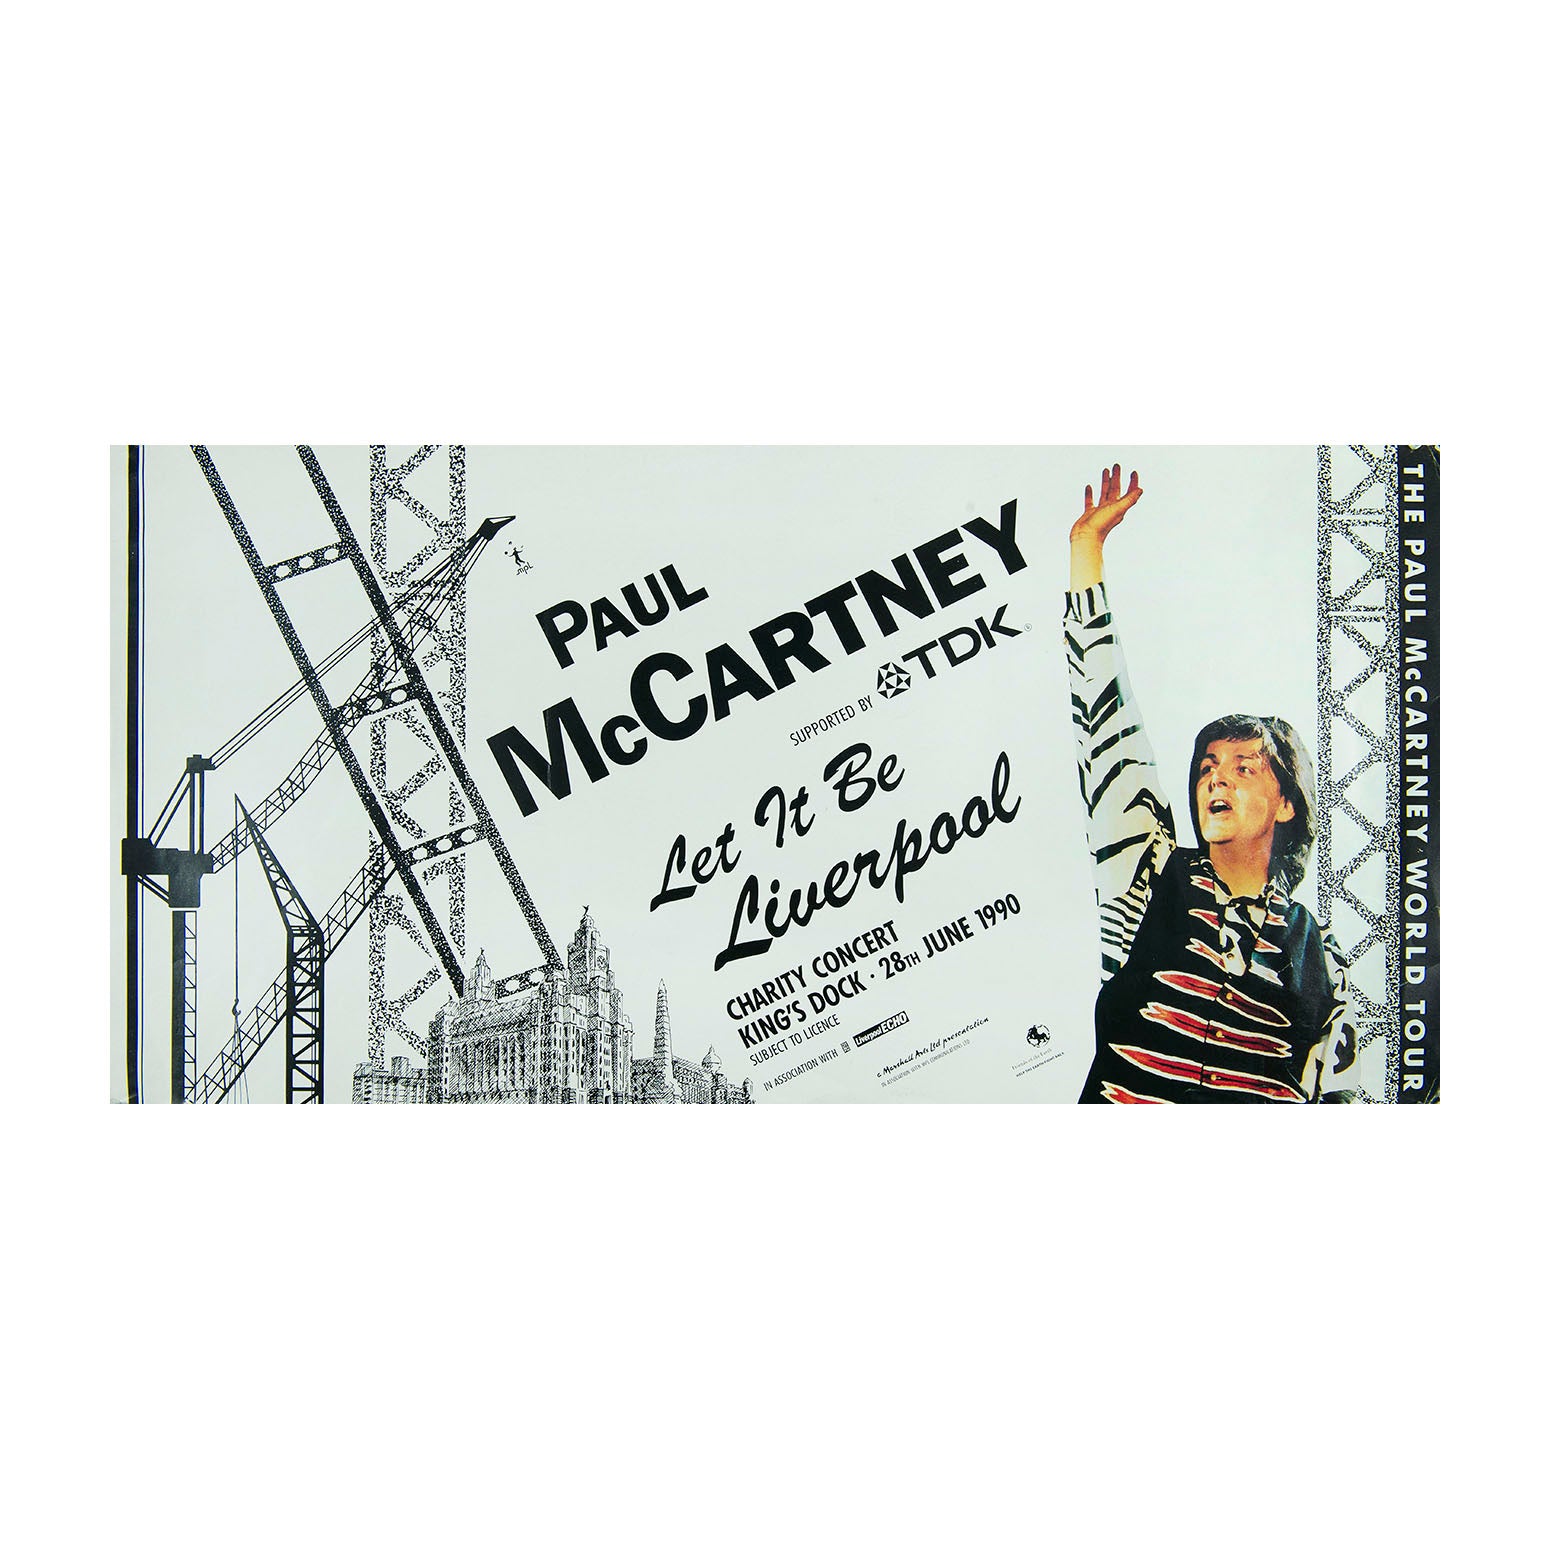 Paul McCartney World Tour. Let it Be, Liverpool.